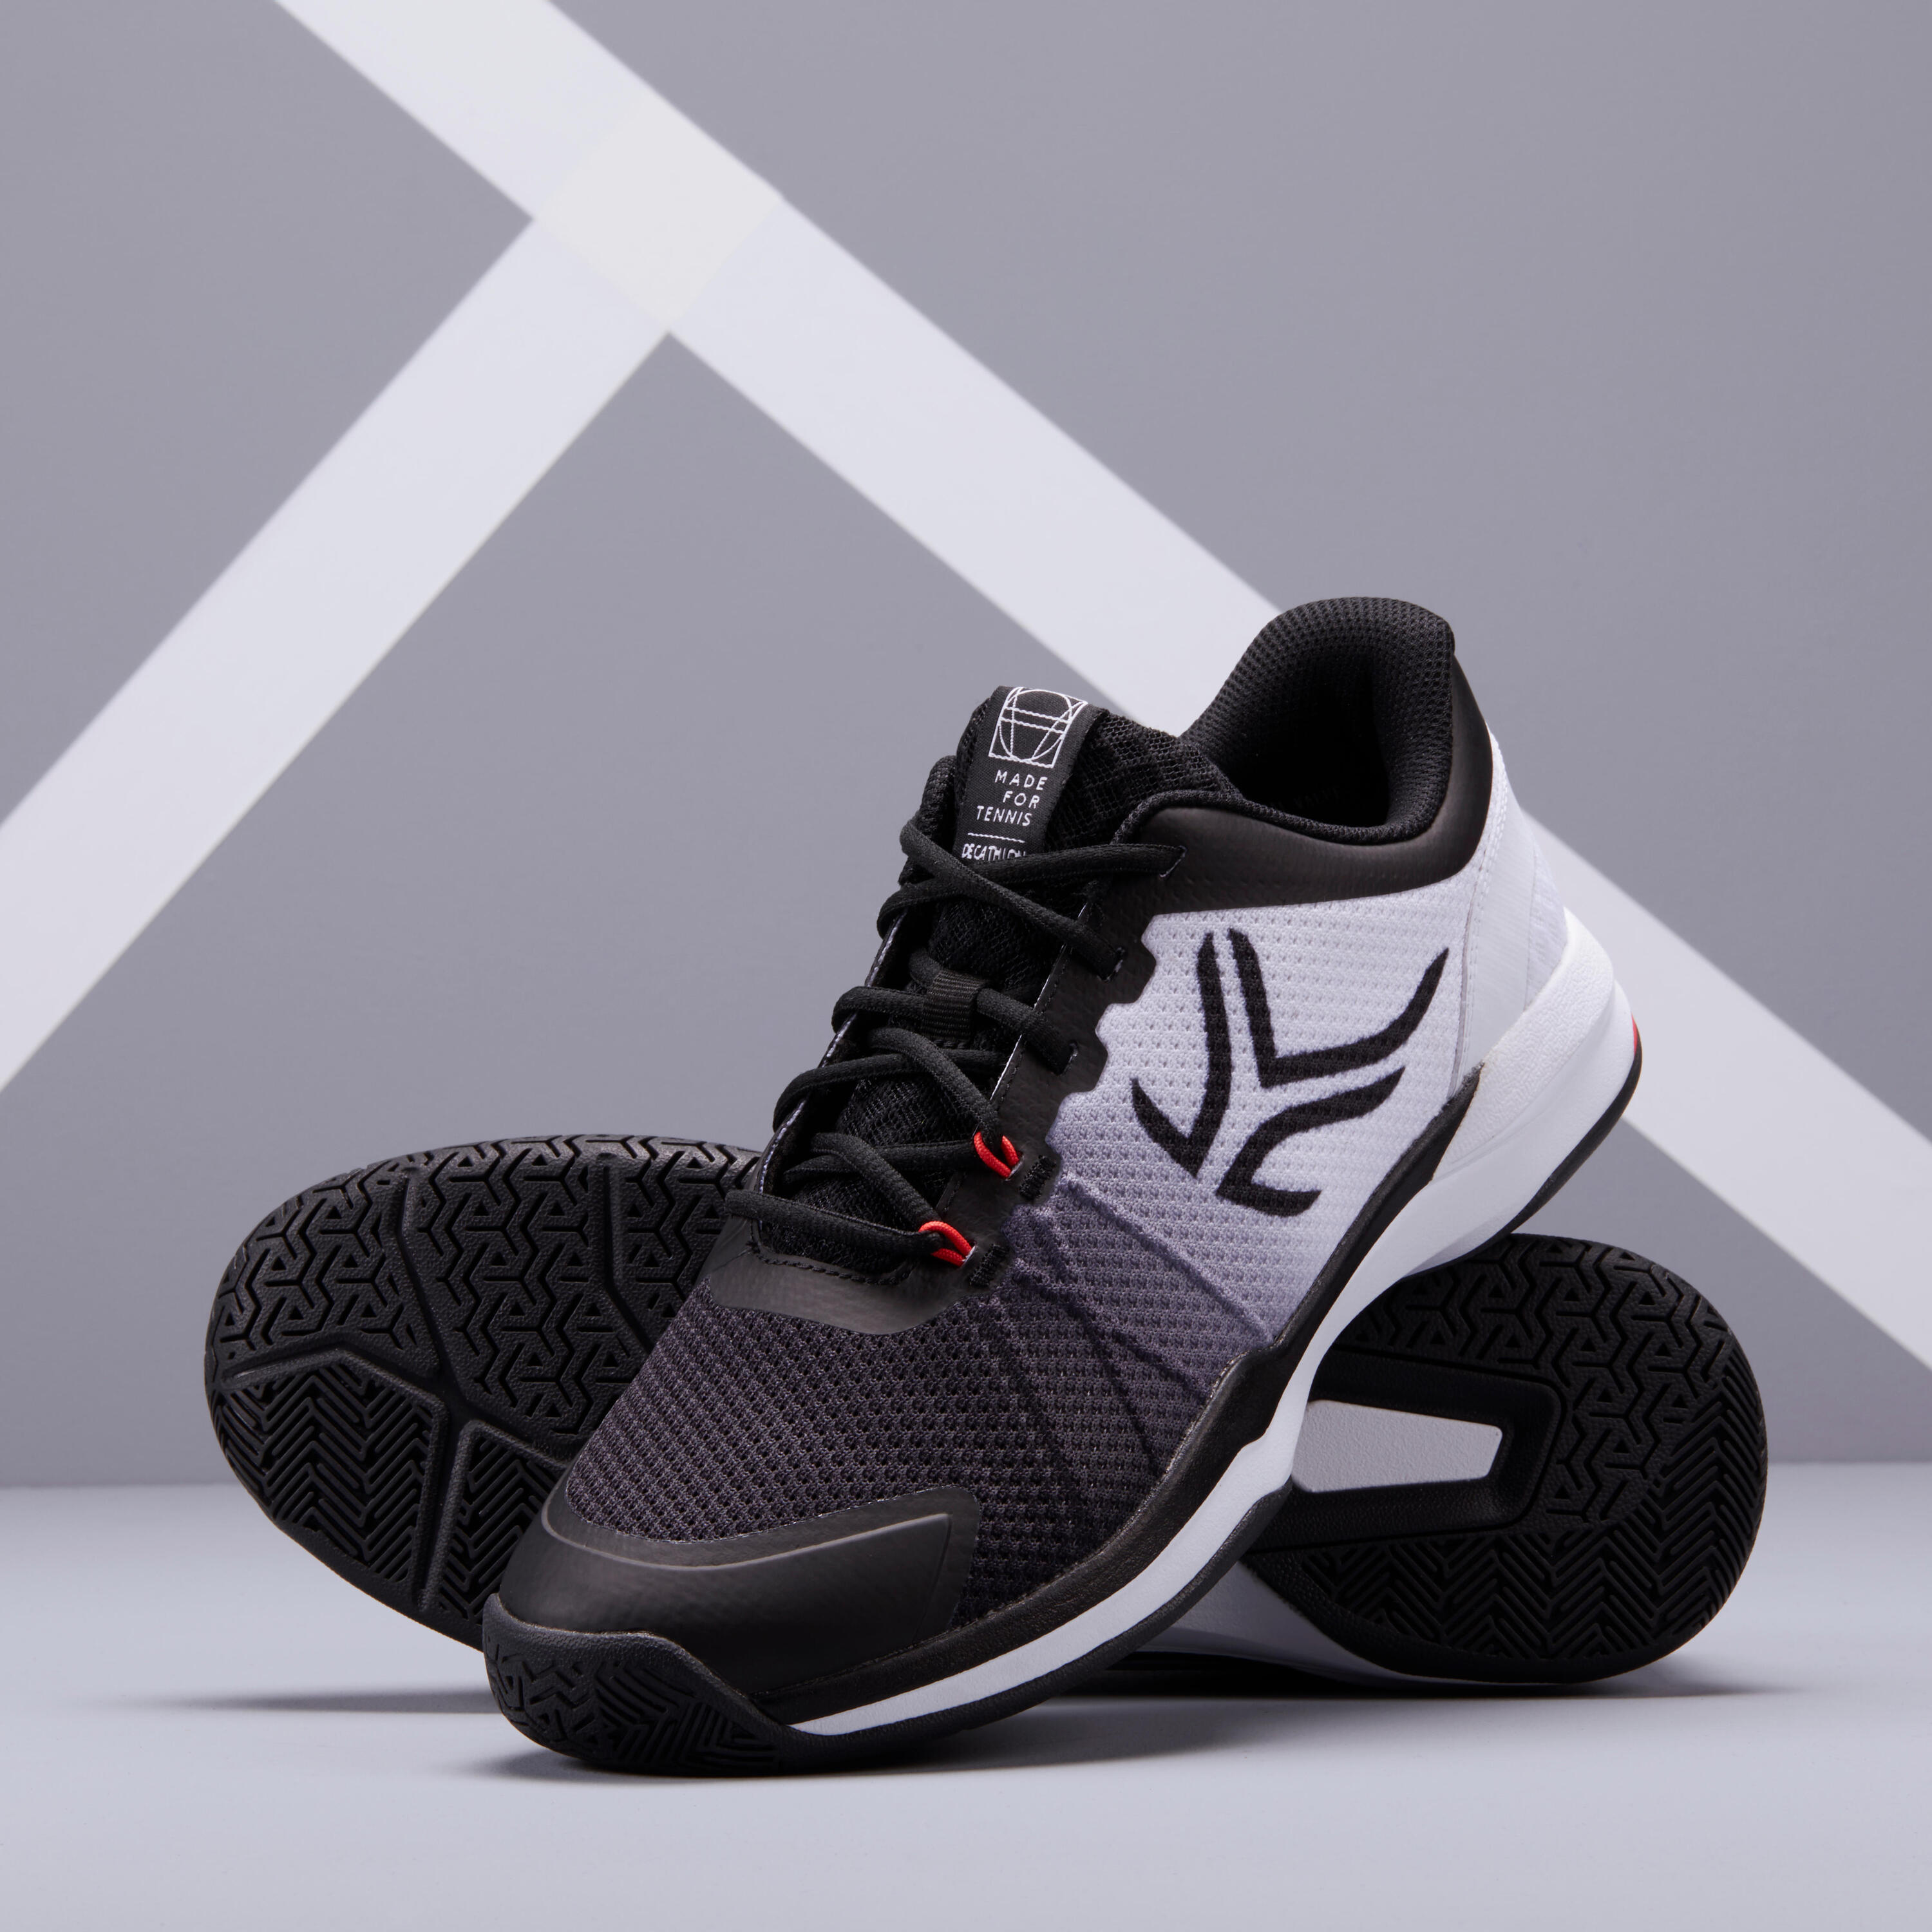 Men's Multi-Court Tennis Shoes TS590 - White/Black 6/8